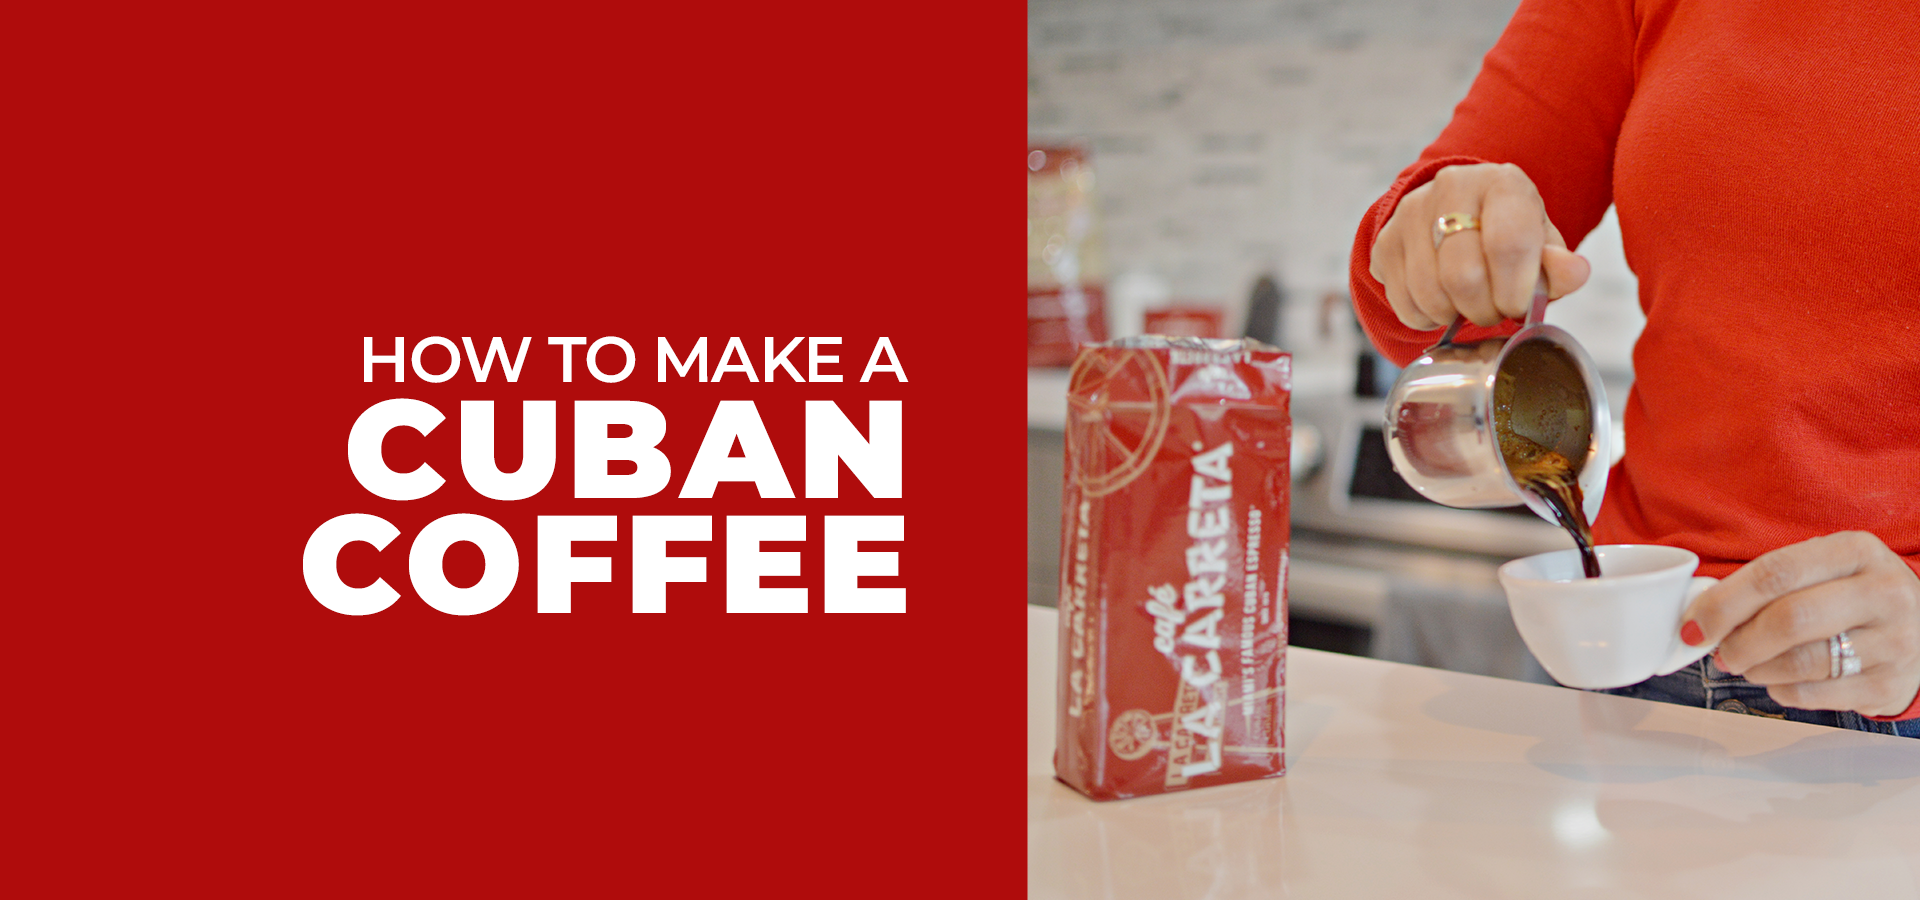 The art of making a Cuban coffee